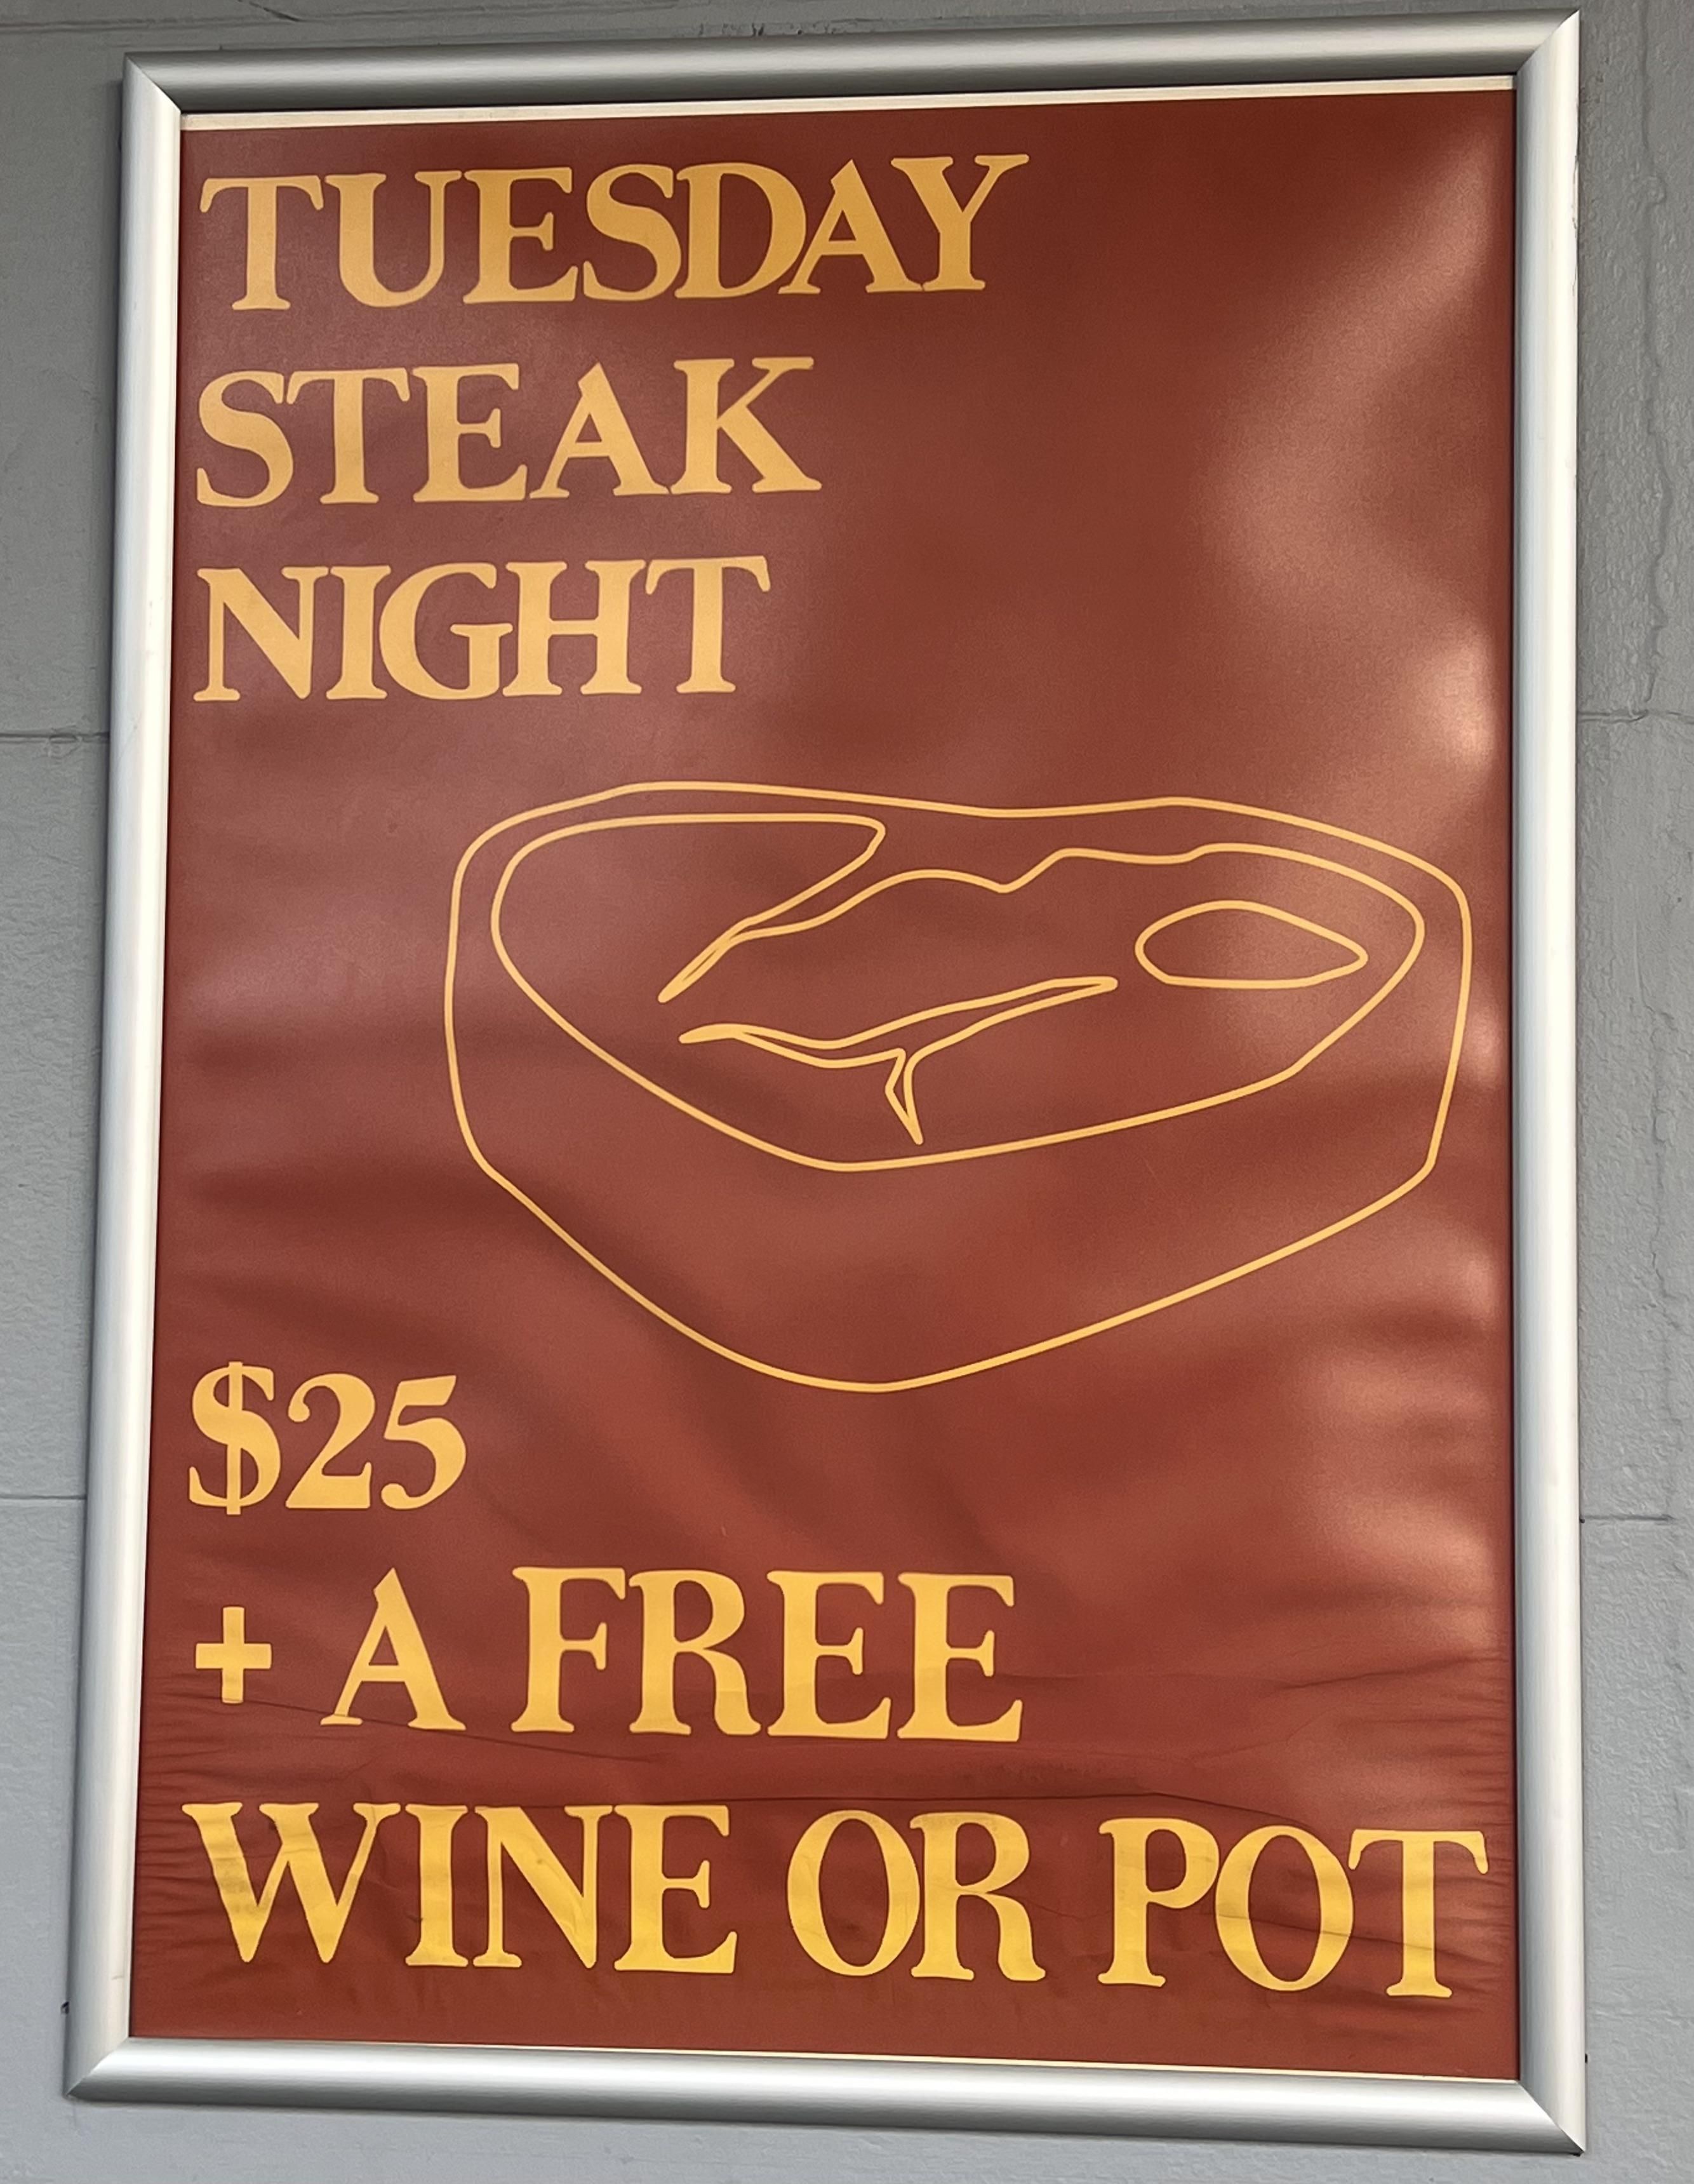 Steak + free wine or pot